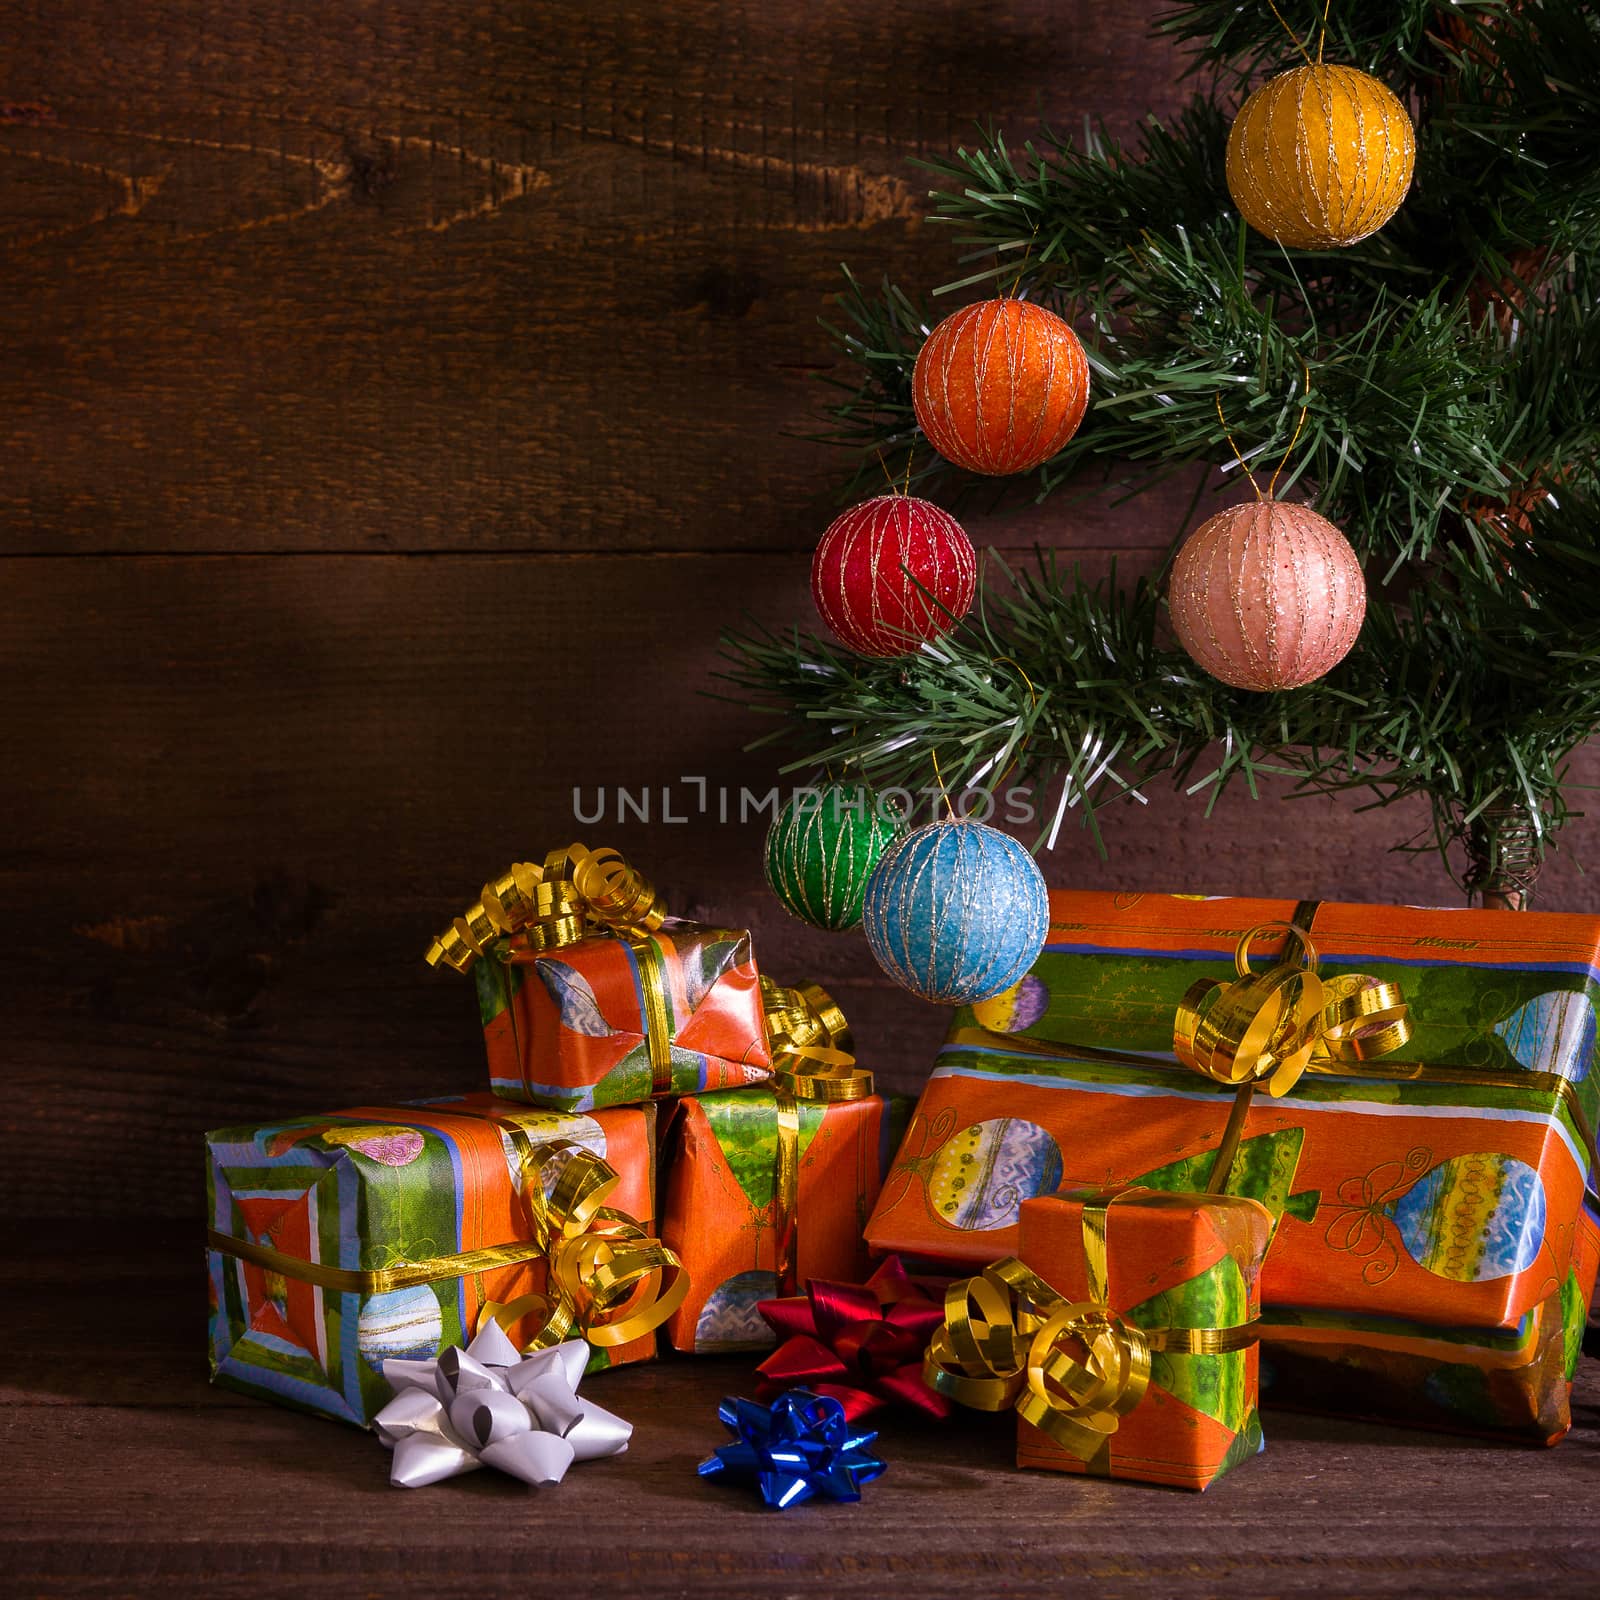 Many Christmas presents under the tree by LuigiMorbidelli